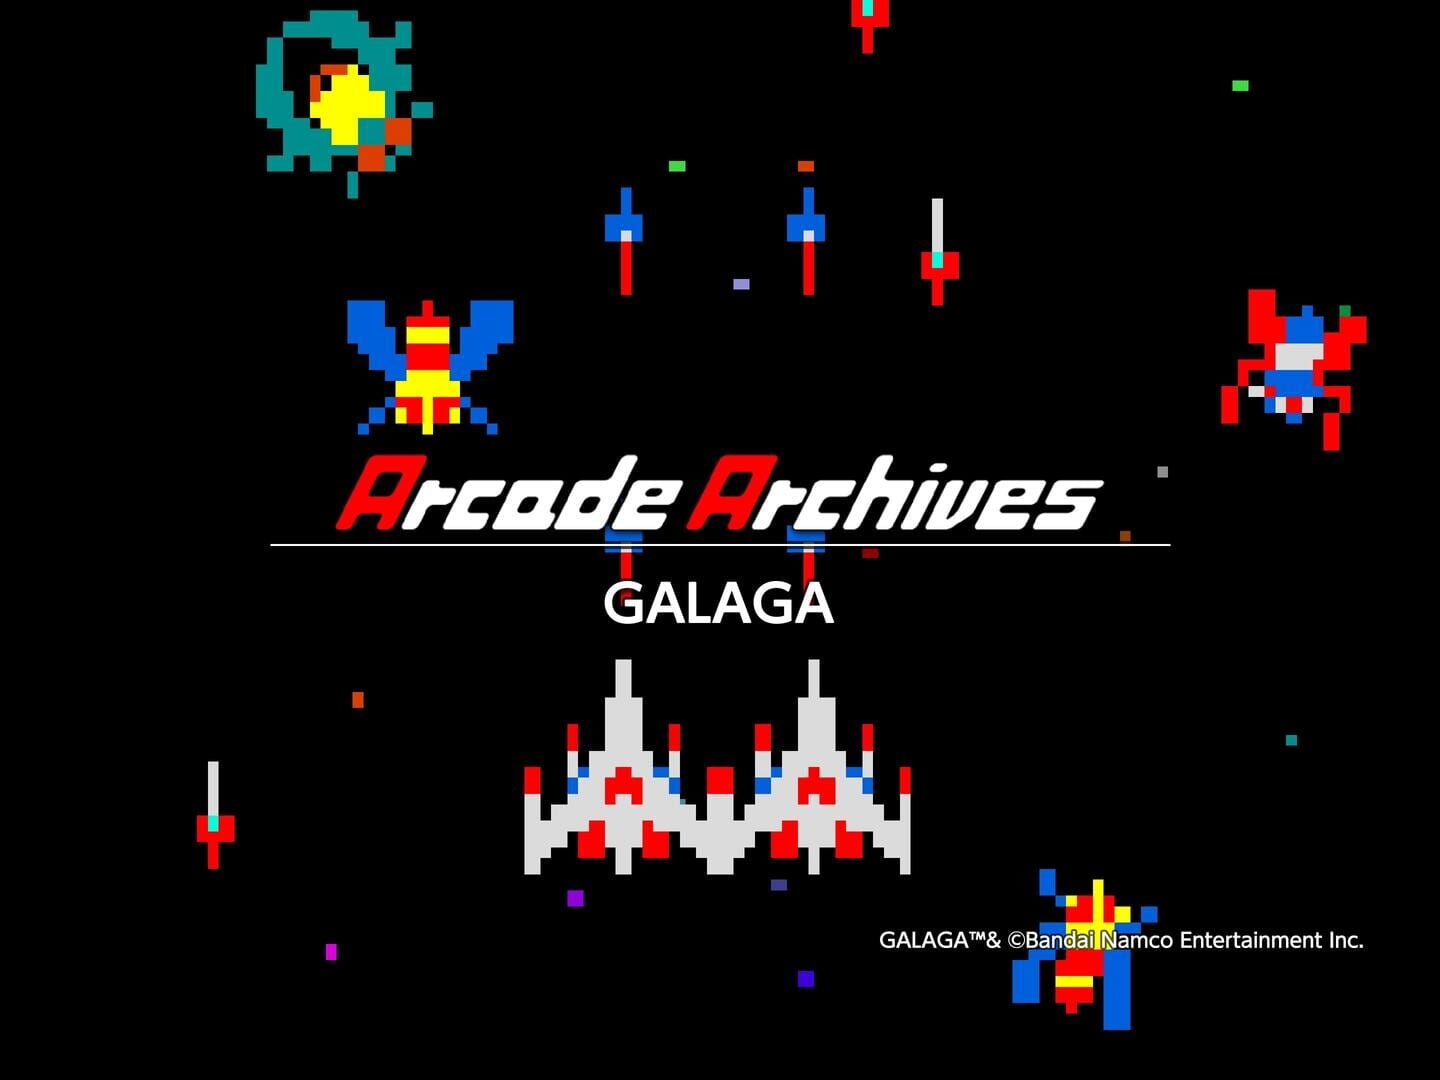 Arcade Archives: Galaga artwork